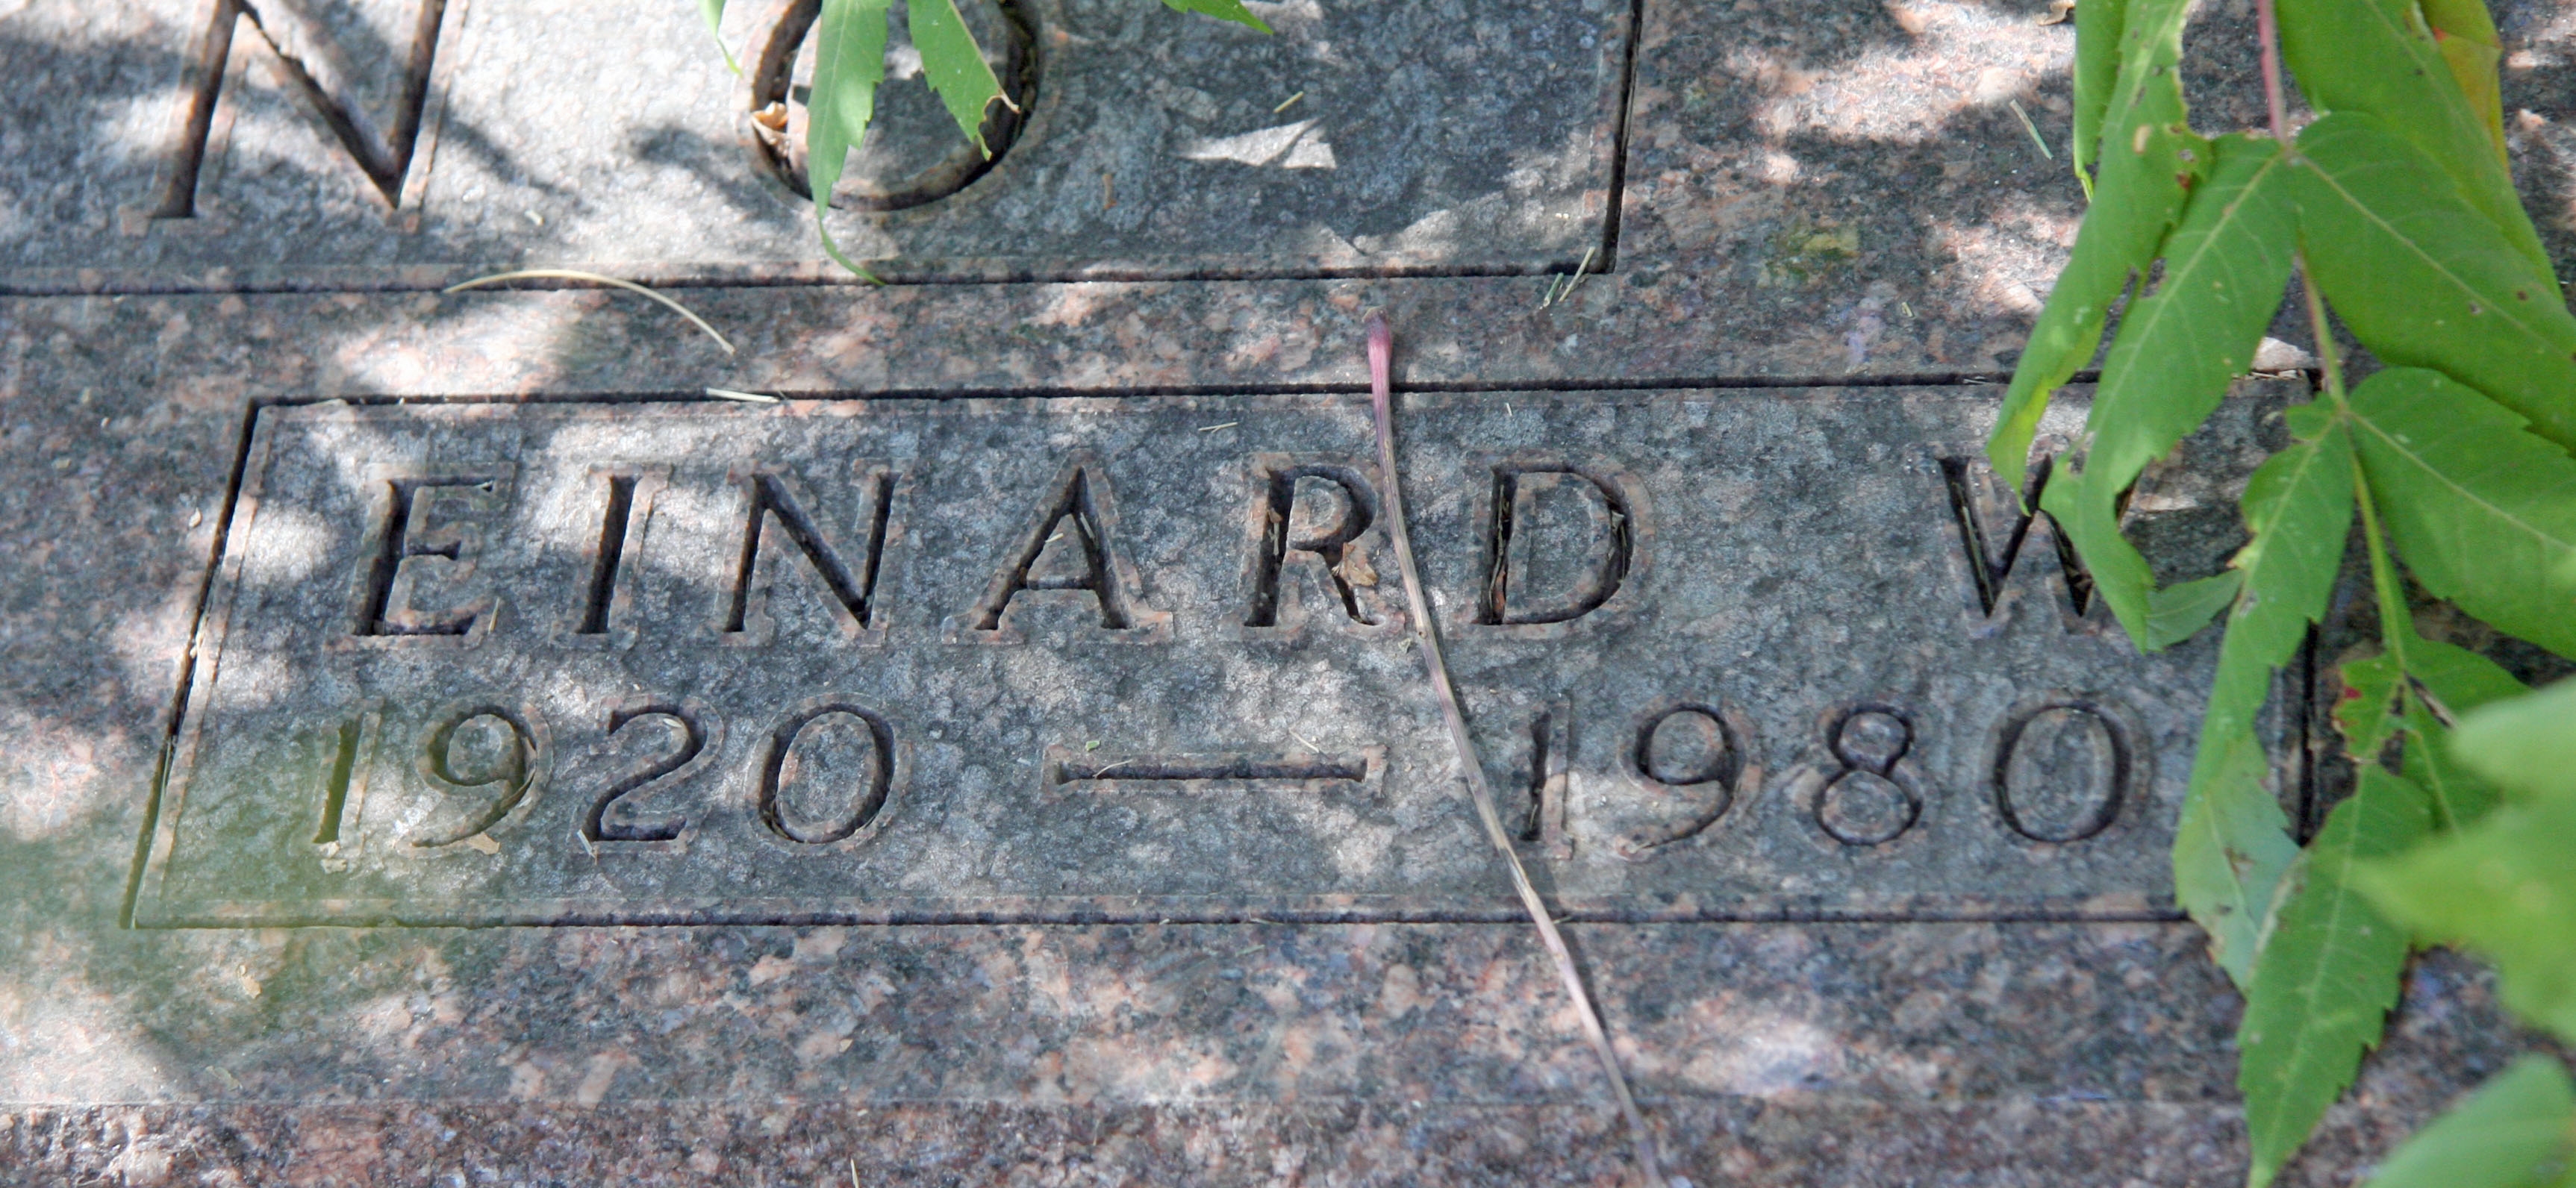 Einard Heino gravesite